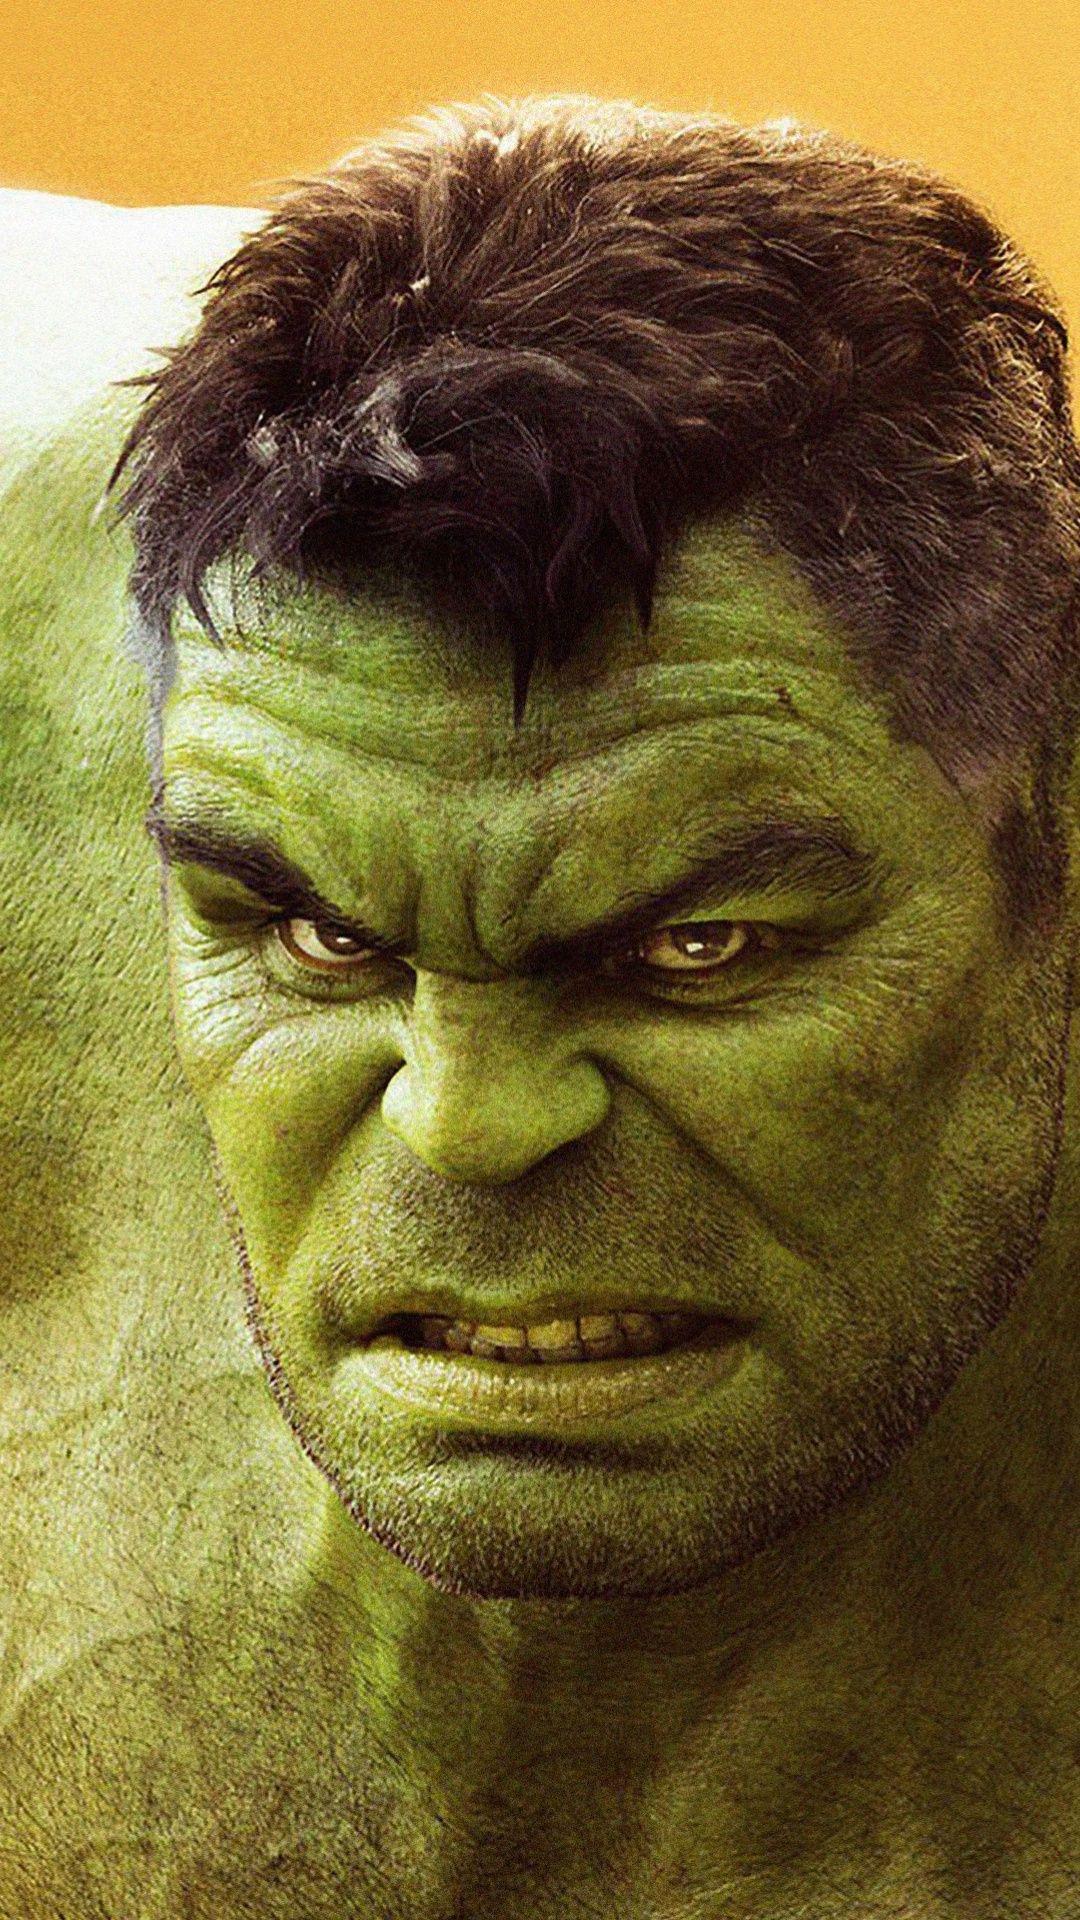 Mighty hulk, green, superhero, movie, Avengers: Infinity War